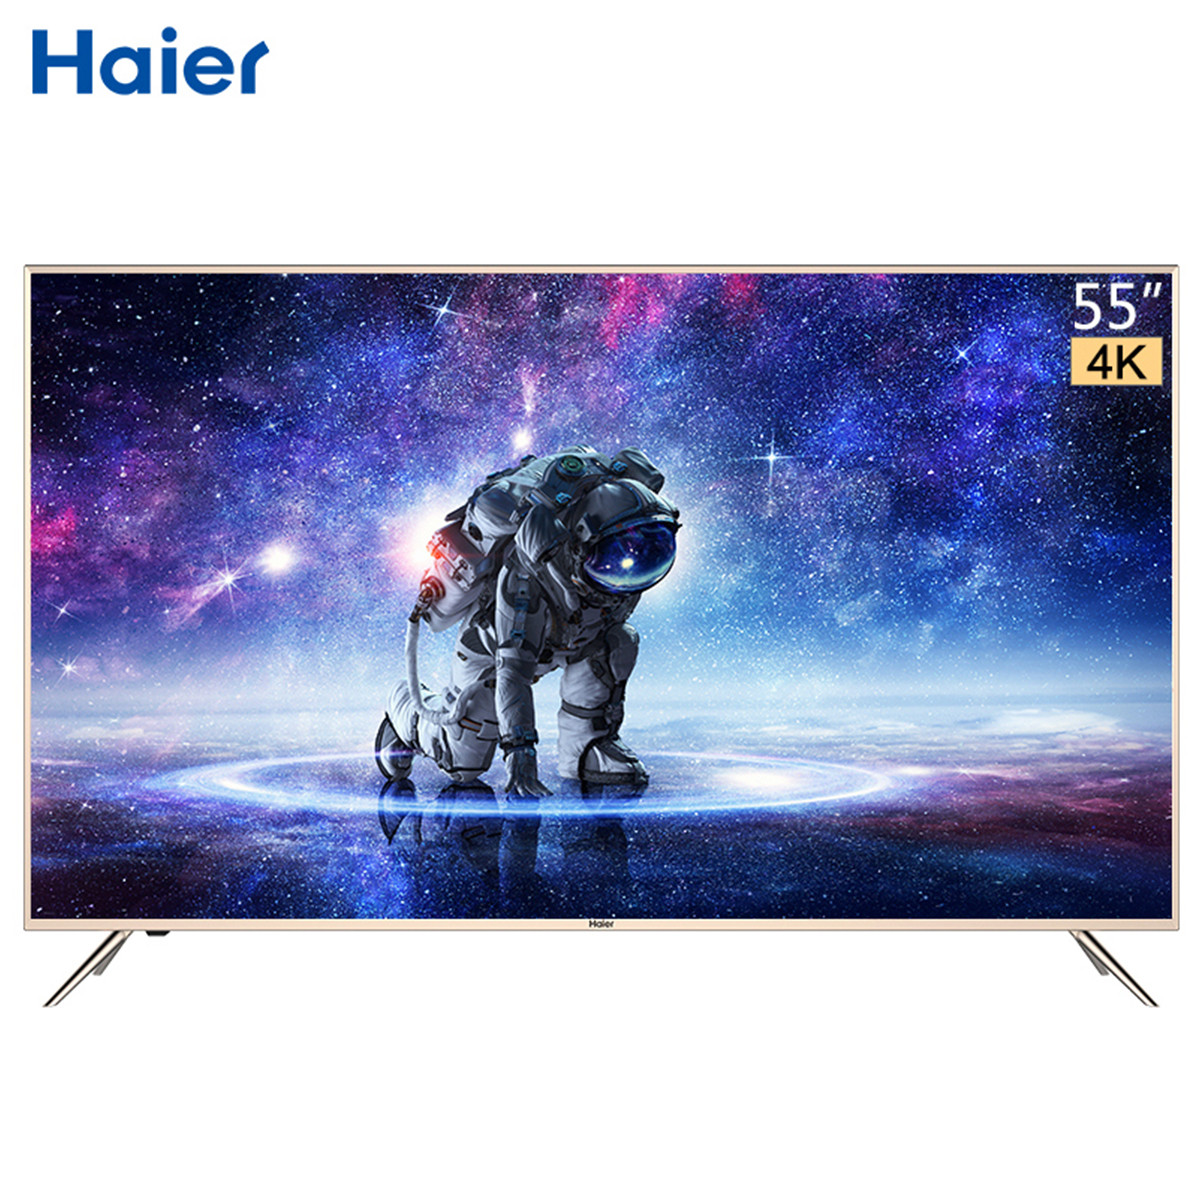 haier海尔55英寸4k智能wifi语音大存储led平板电视机